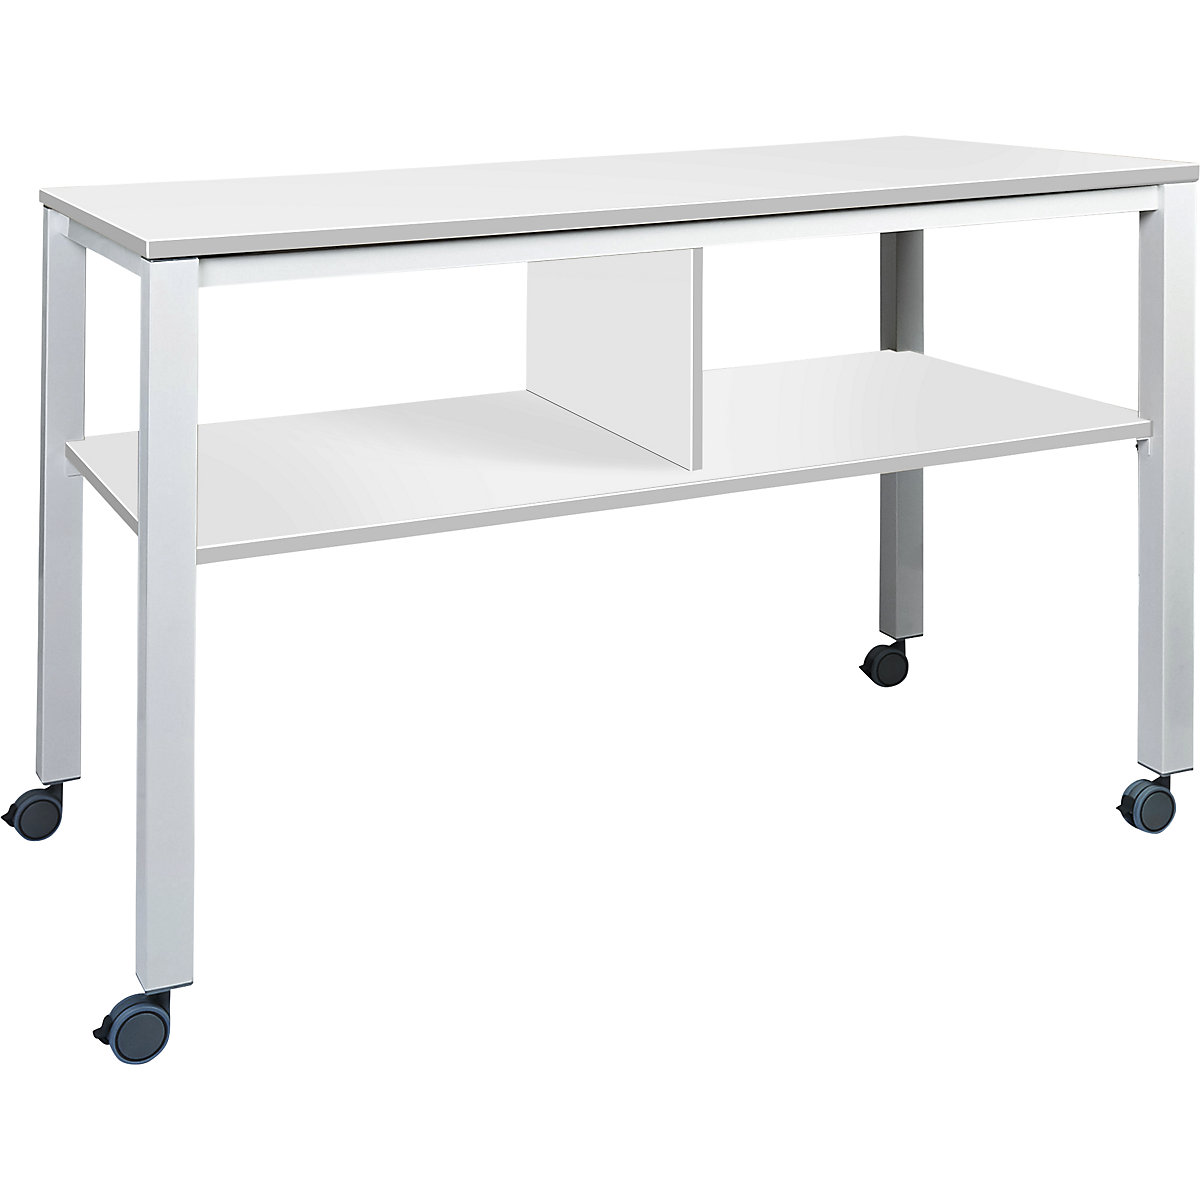 E2008 multifunctional table, mobile, frame in white, worktop in white-7